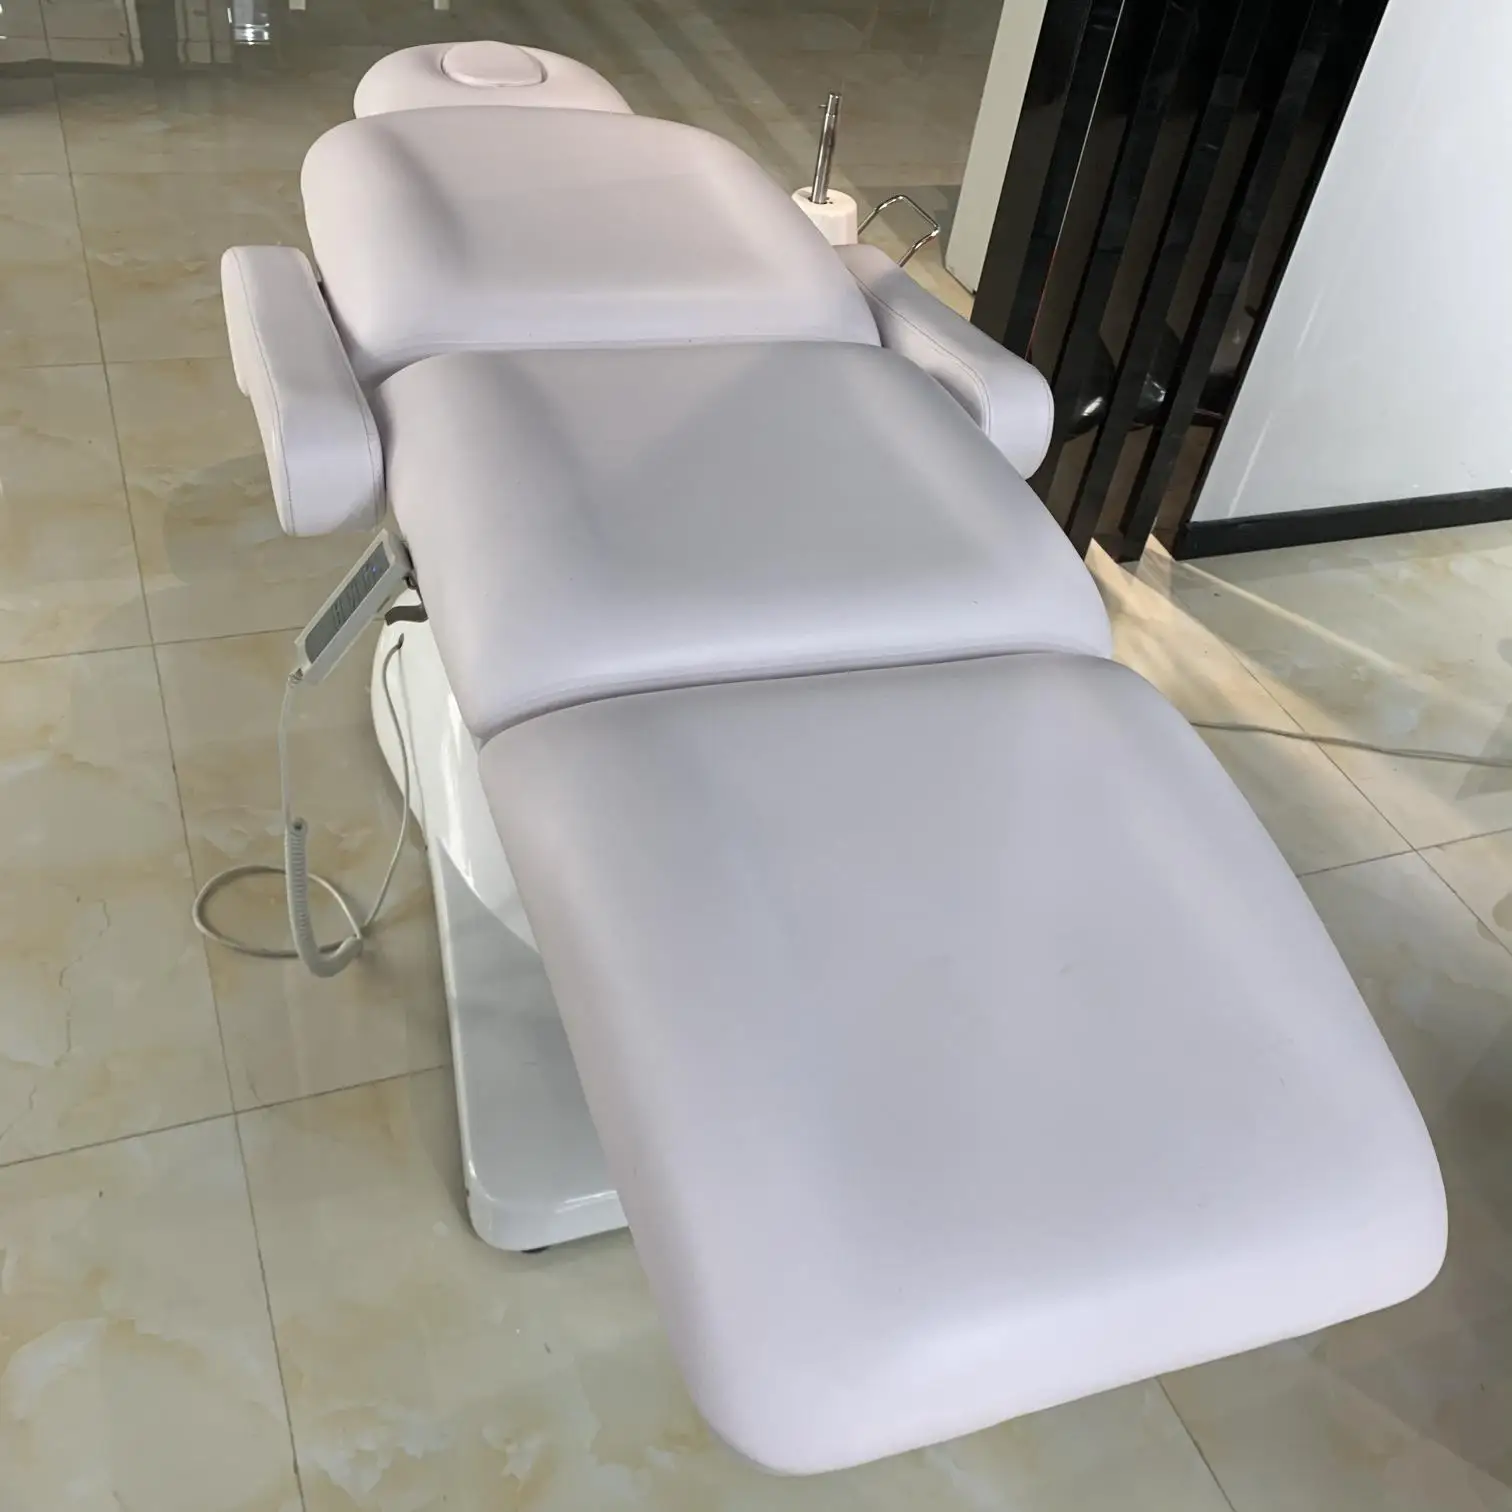 Hot sale modern massage electric beauty salon bed factory direct supplier